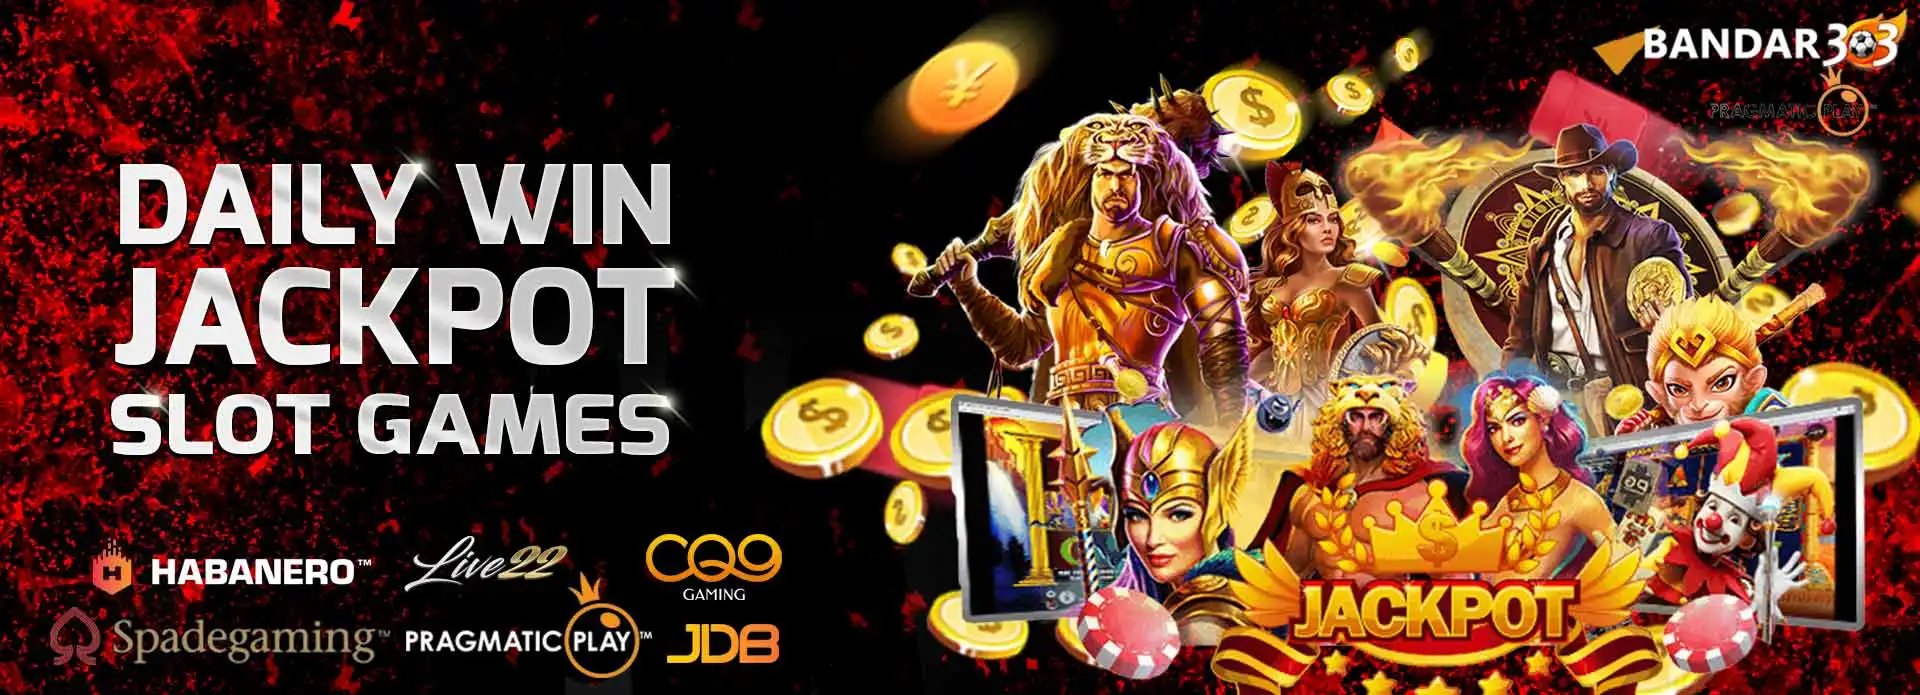 Daily Win Jackpot Slot Games Bandar303